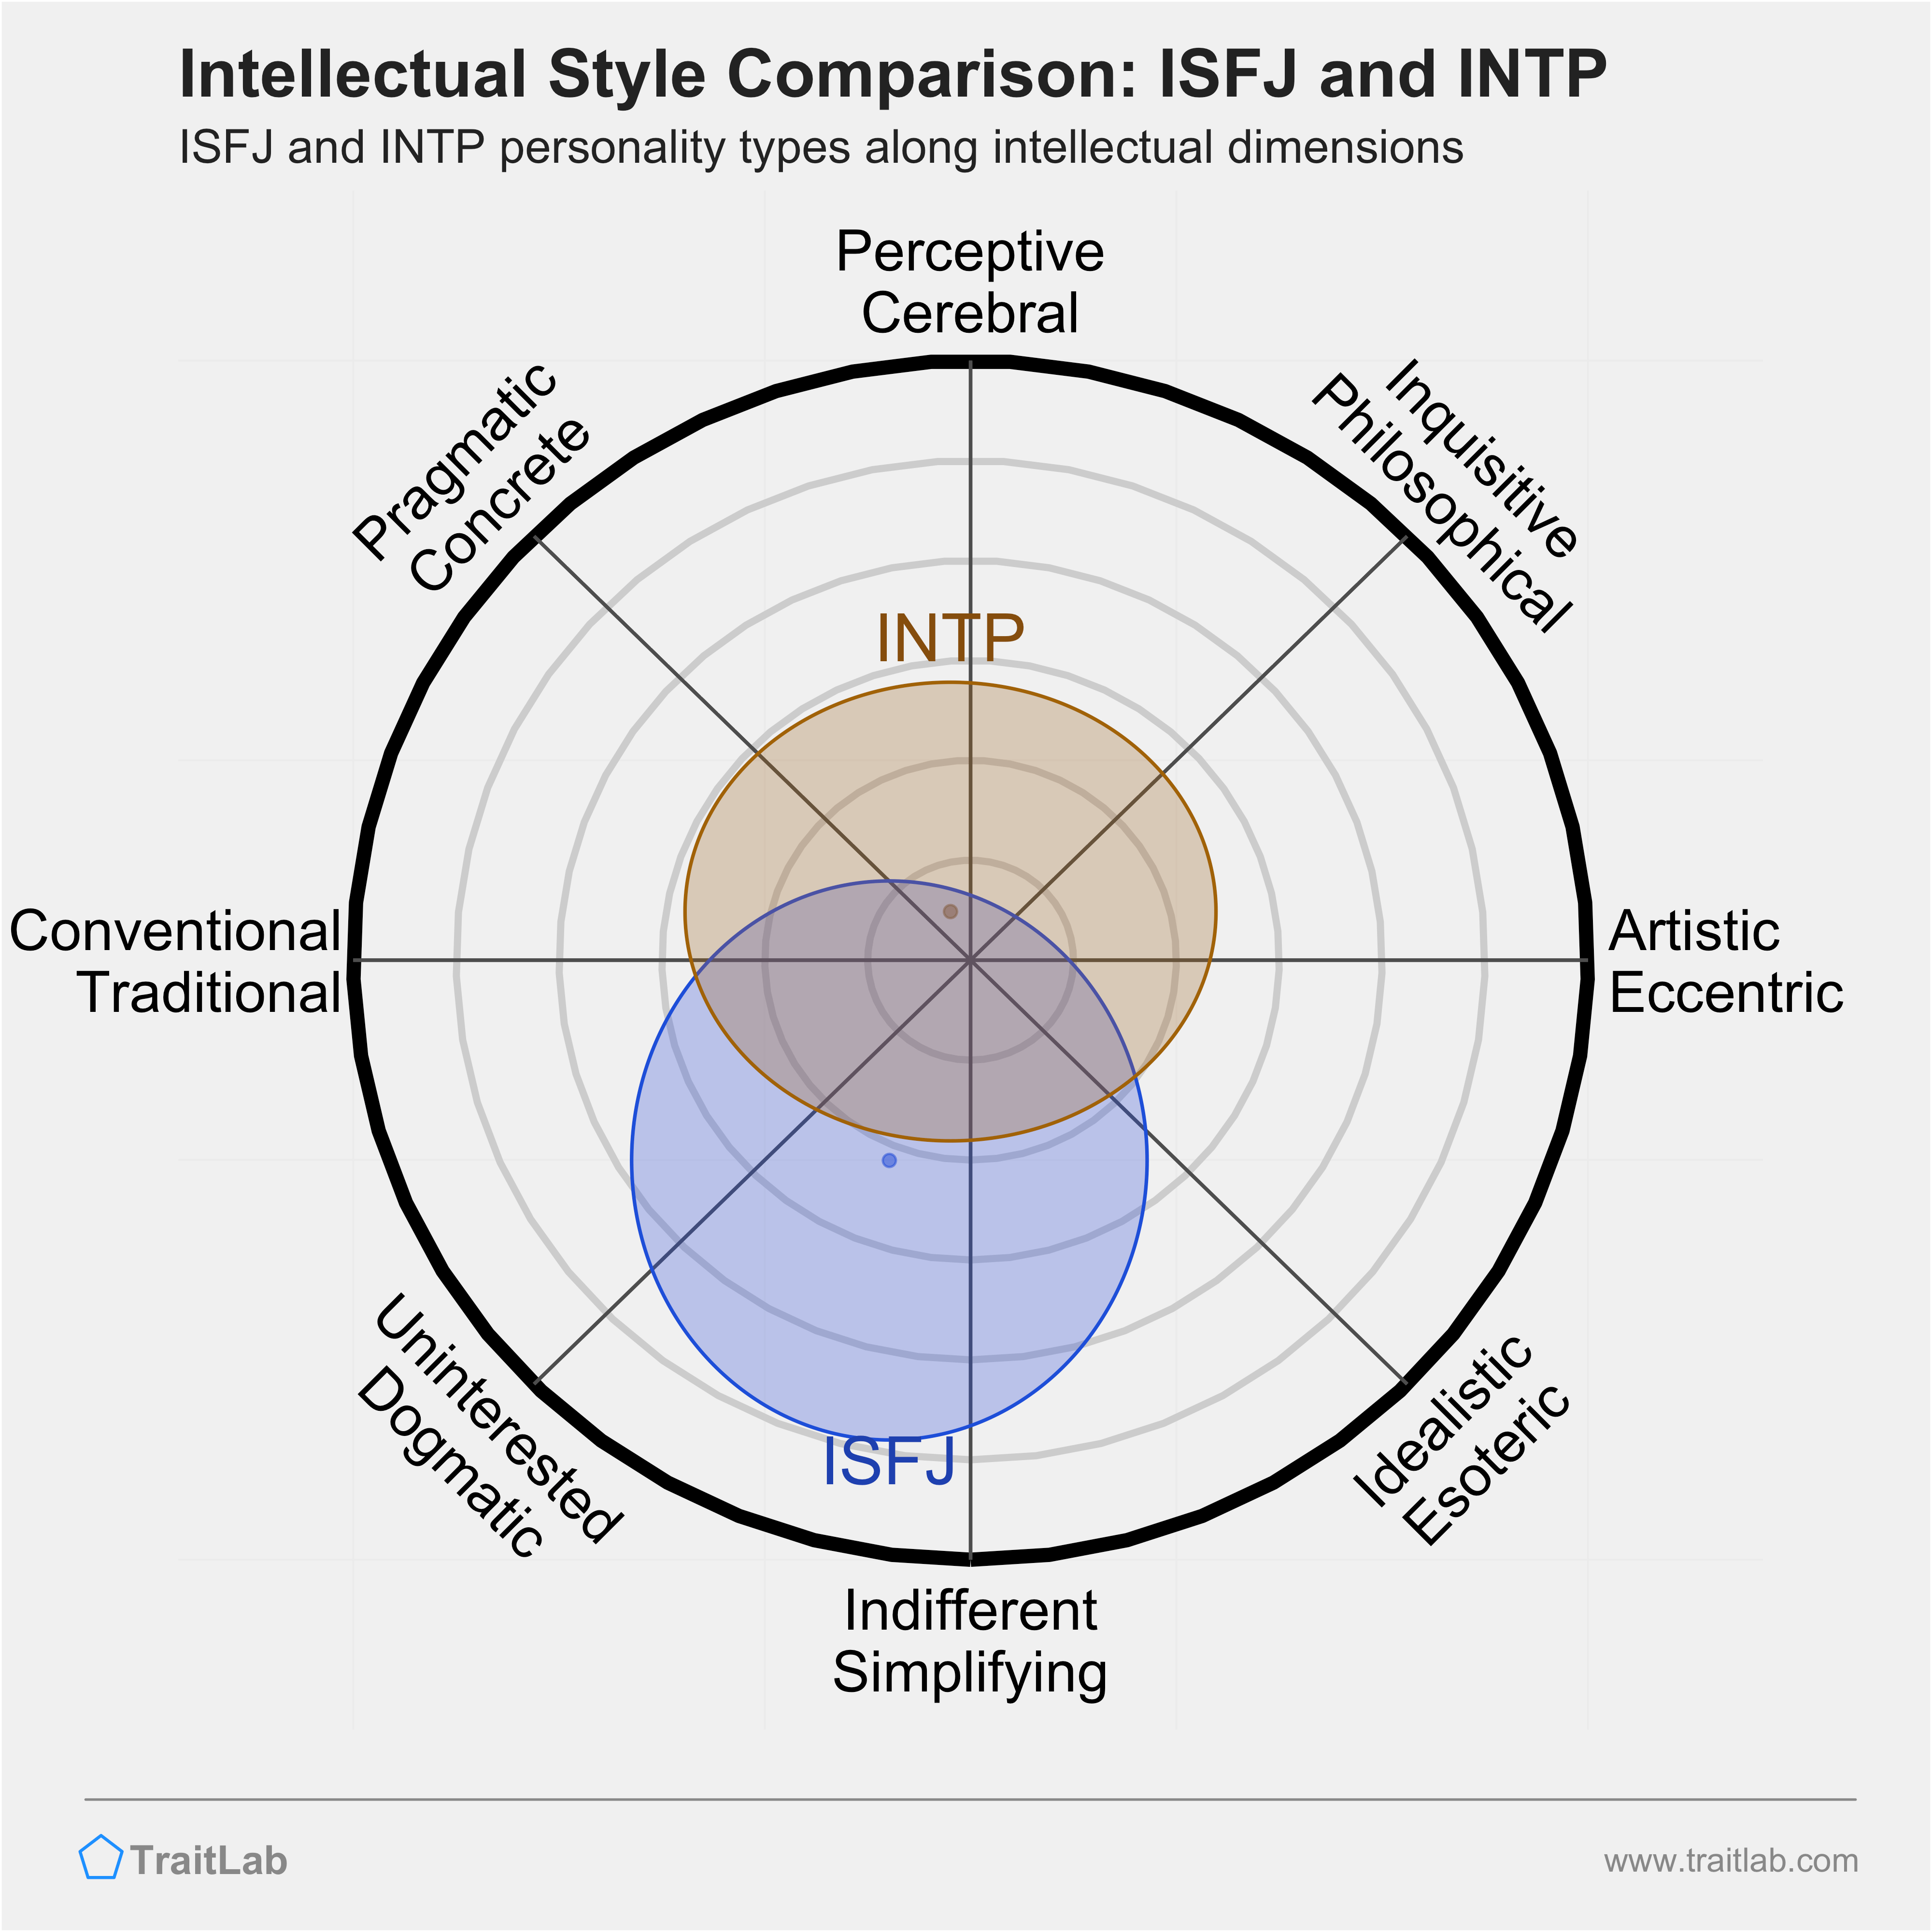 ISFJ and INTP comparison across intellectual dimensions